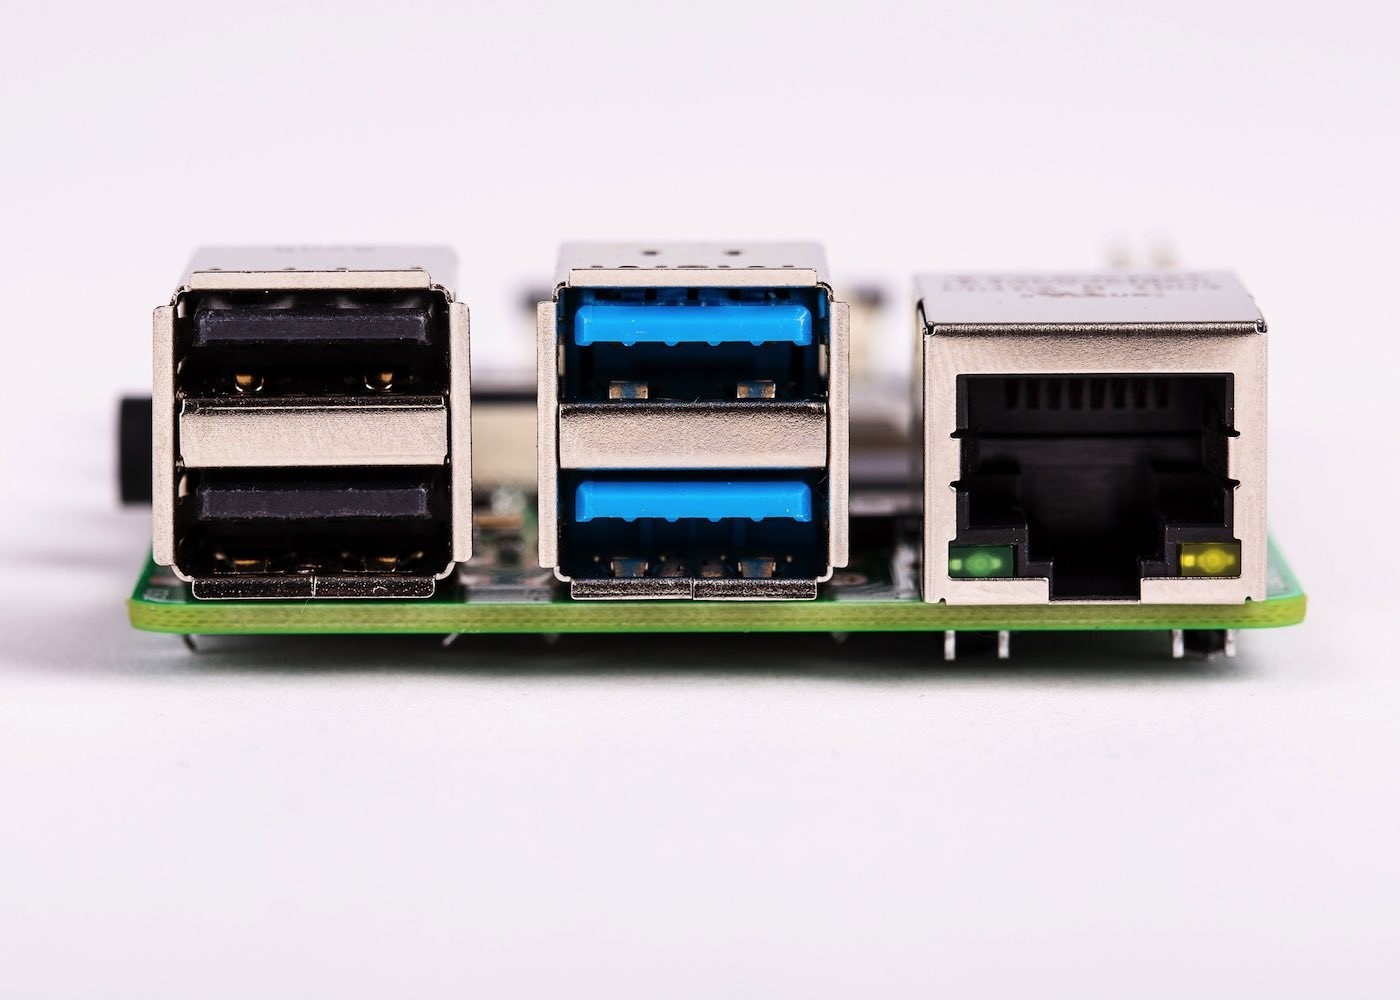 Raspberry Pi 4 - 2GB RAM | Made in the UK - 2 GB